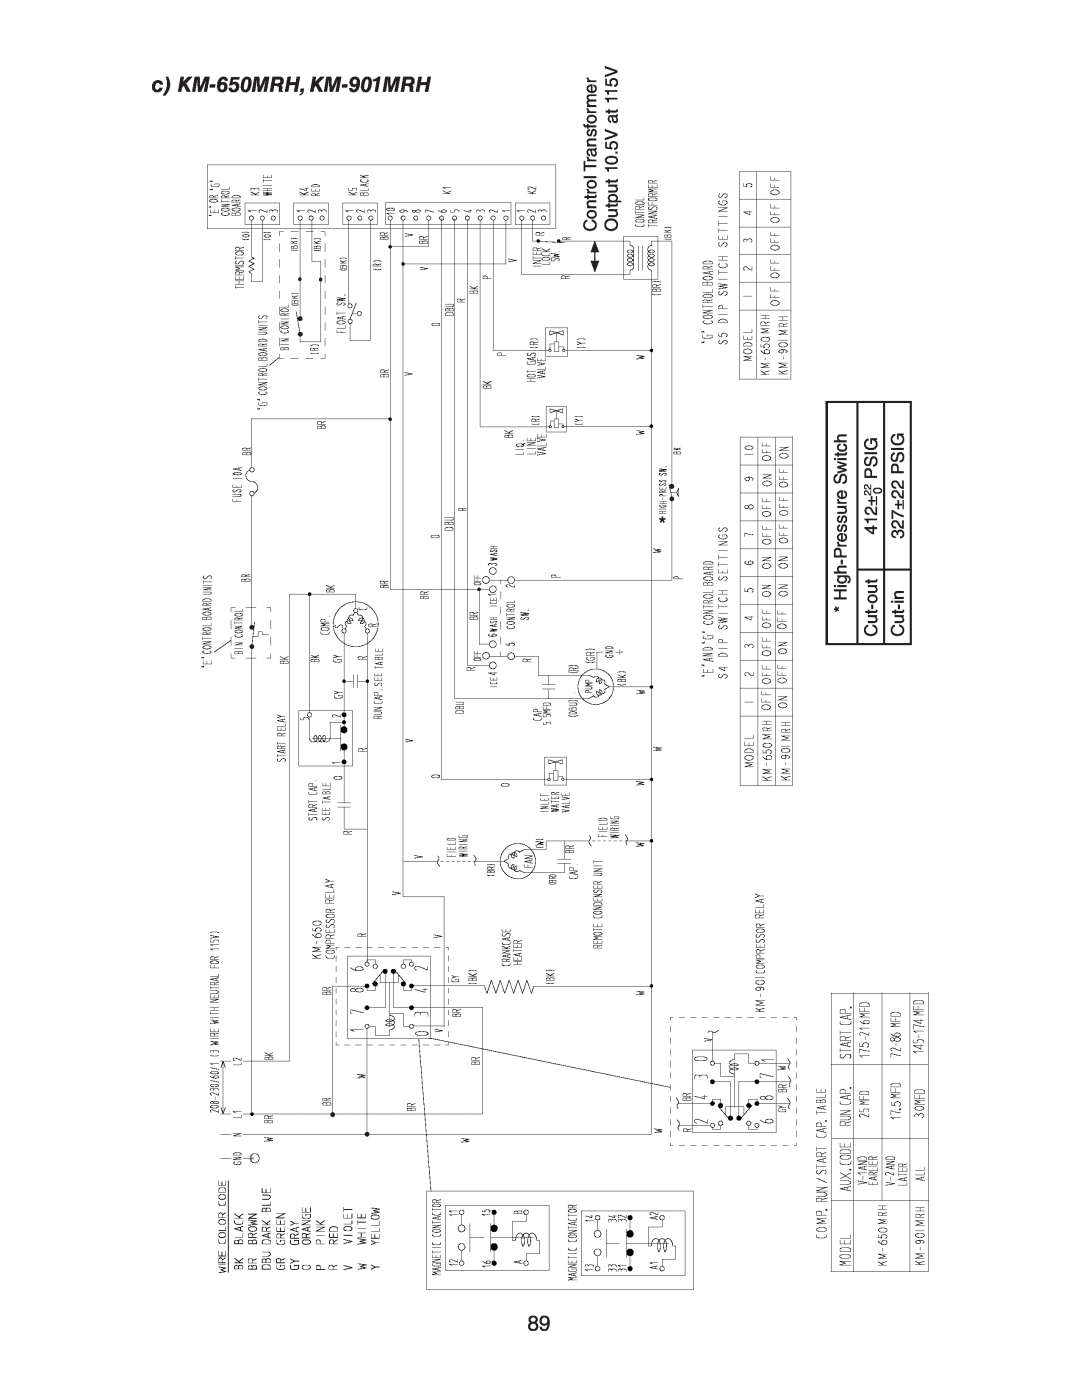 Hoshizaki MRH KM-600MAH KM-650MAH c KM-650MRH, KM-901MRH, Transformer 10.5V at115V, Control Output, PressureSwitch, 412±22 